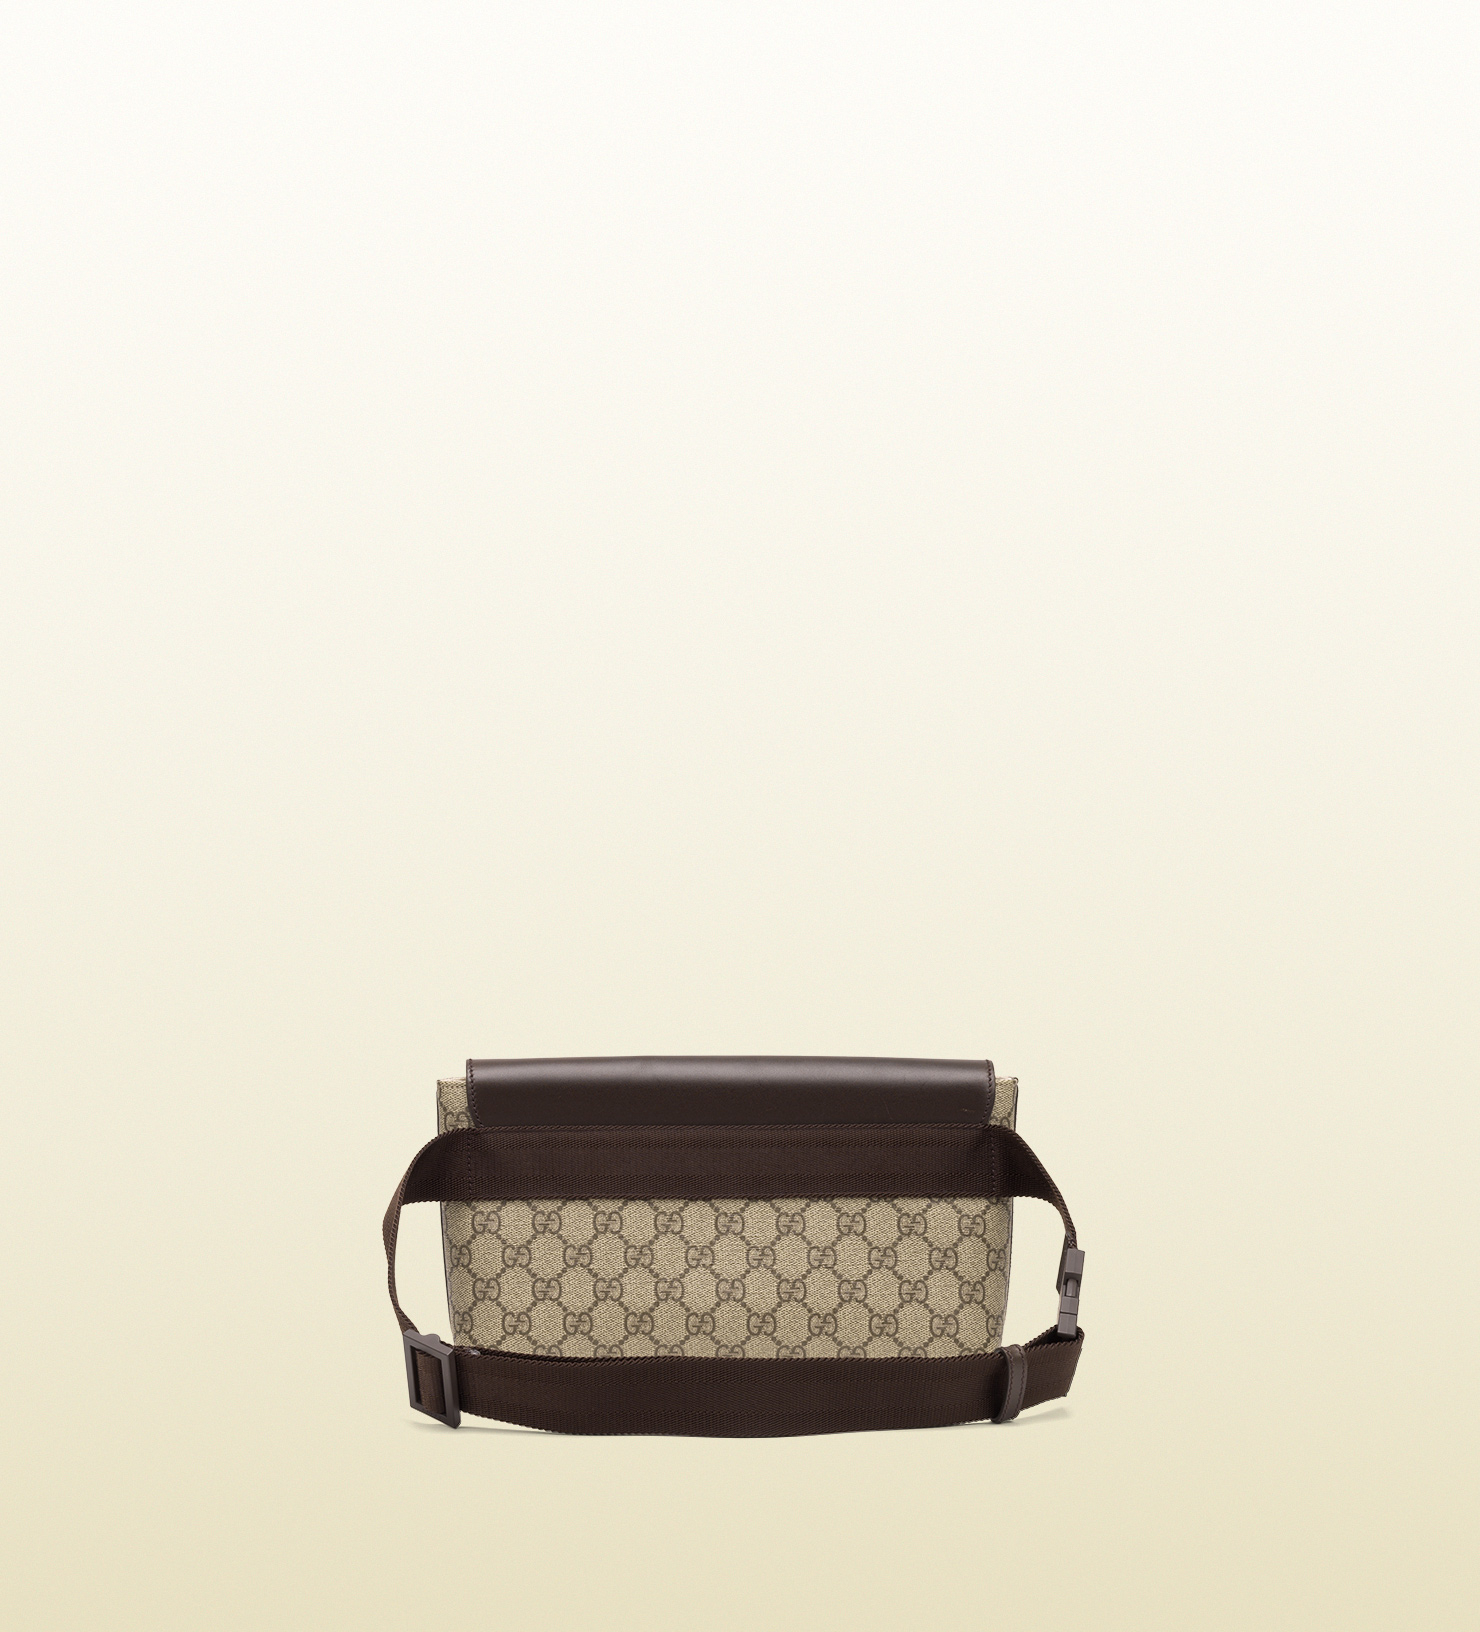 Lyst - Gucci Gg Supreme Canvas Belt Bag in Natural